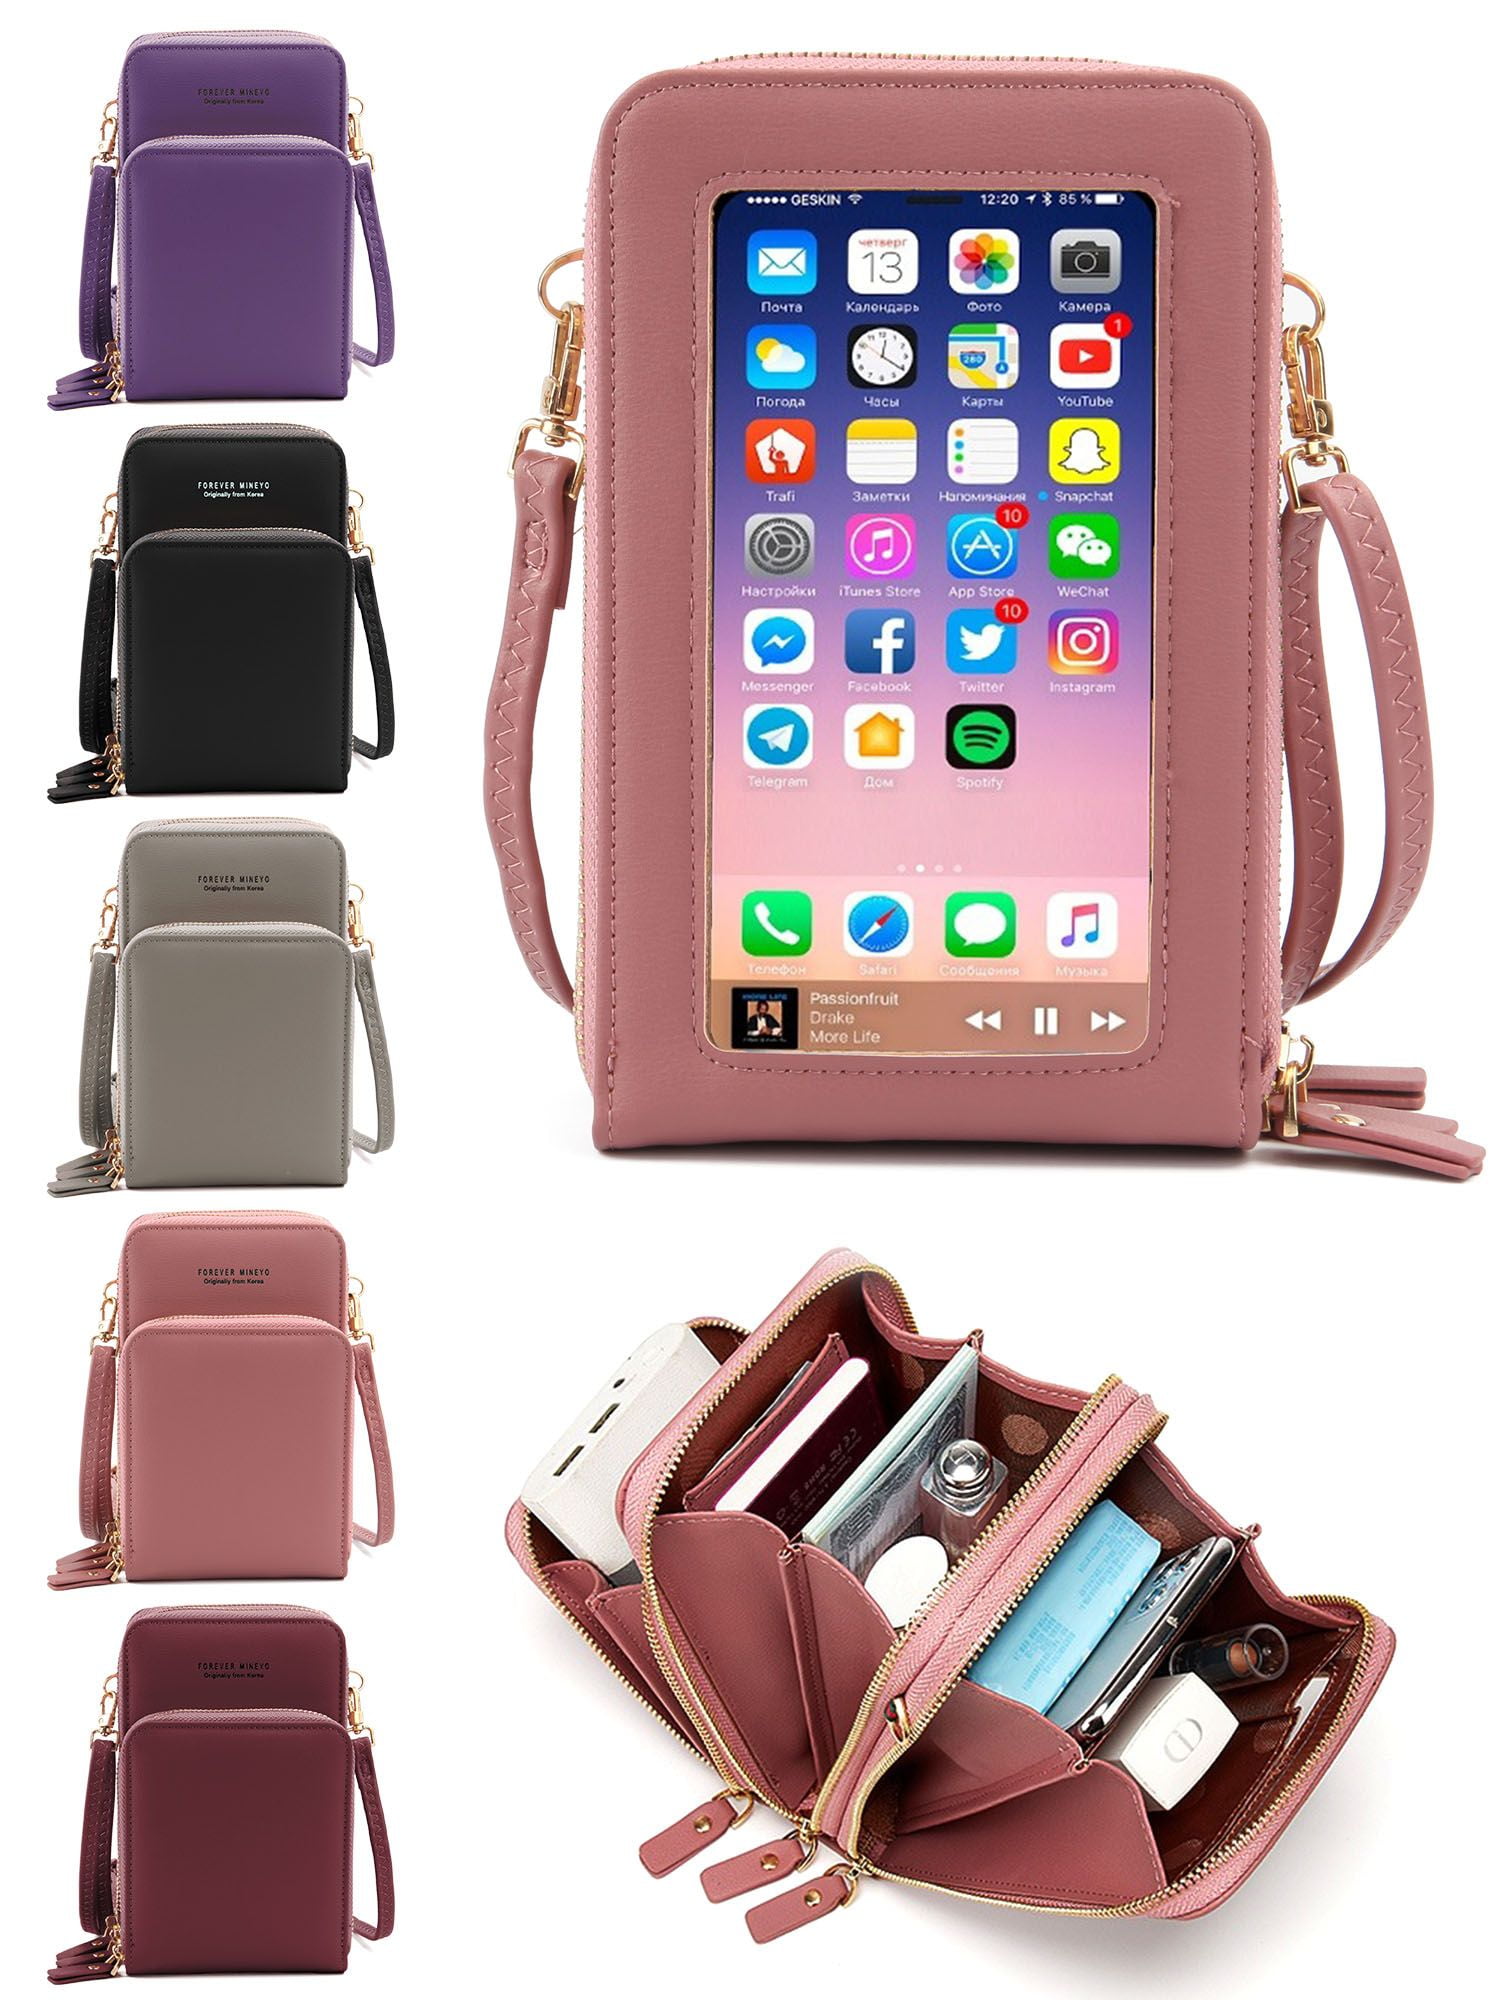 RFID Blocking Touch Screen Phone Bag Small Crossbody Bag Shoulder Handbag  Wristlet for Women (E1 Ecru - Touch Screen): Handbags: Amazon.com